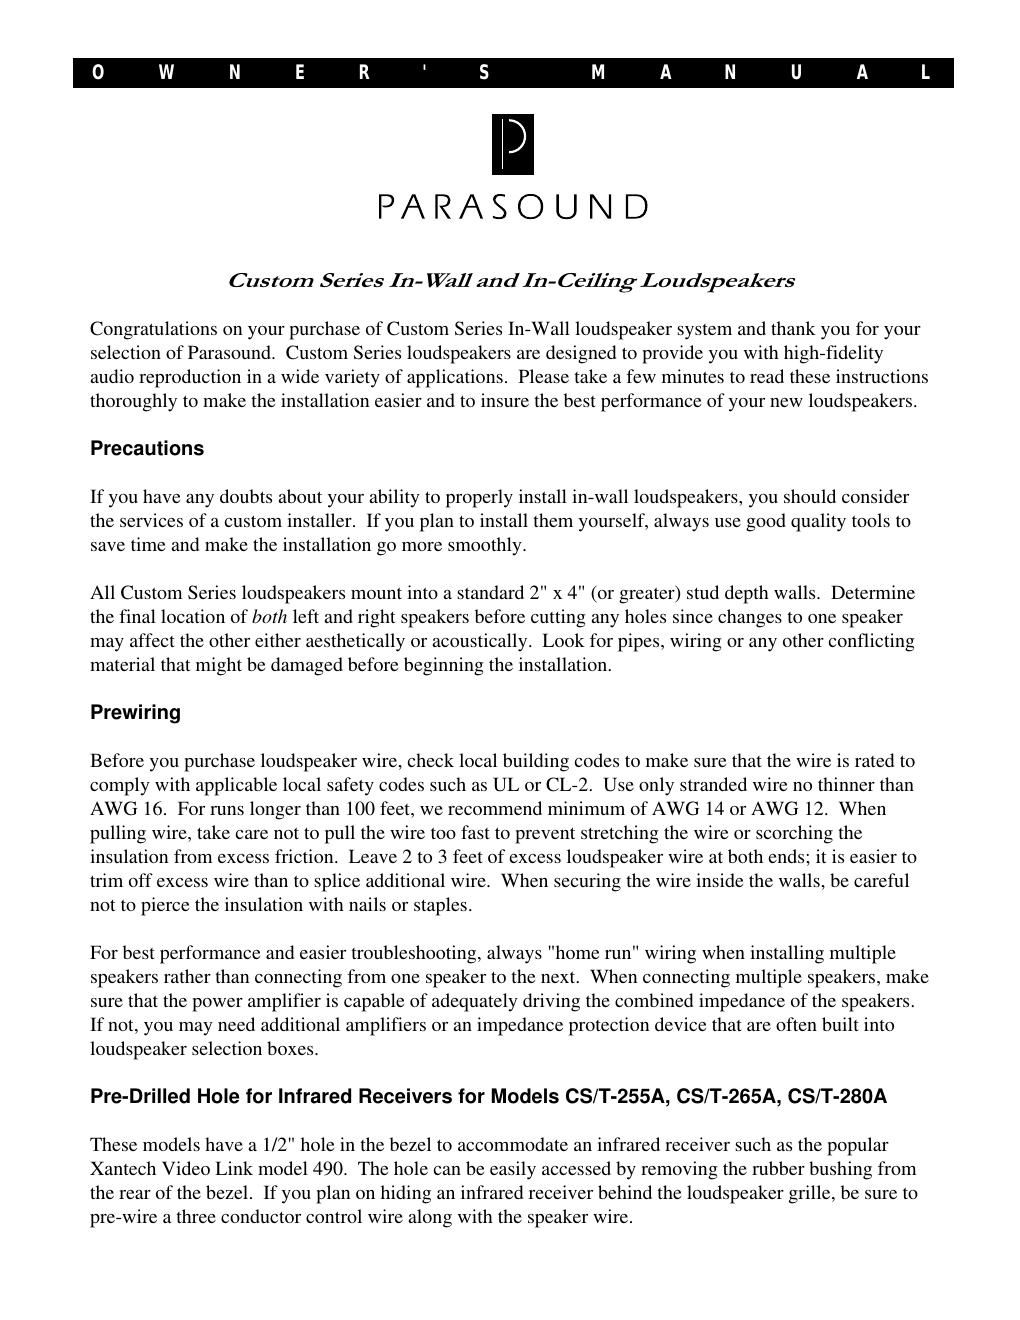 parasound custom owners manual